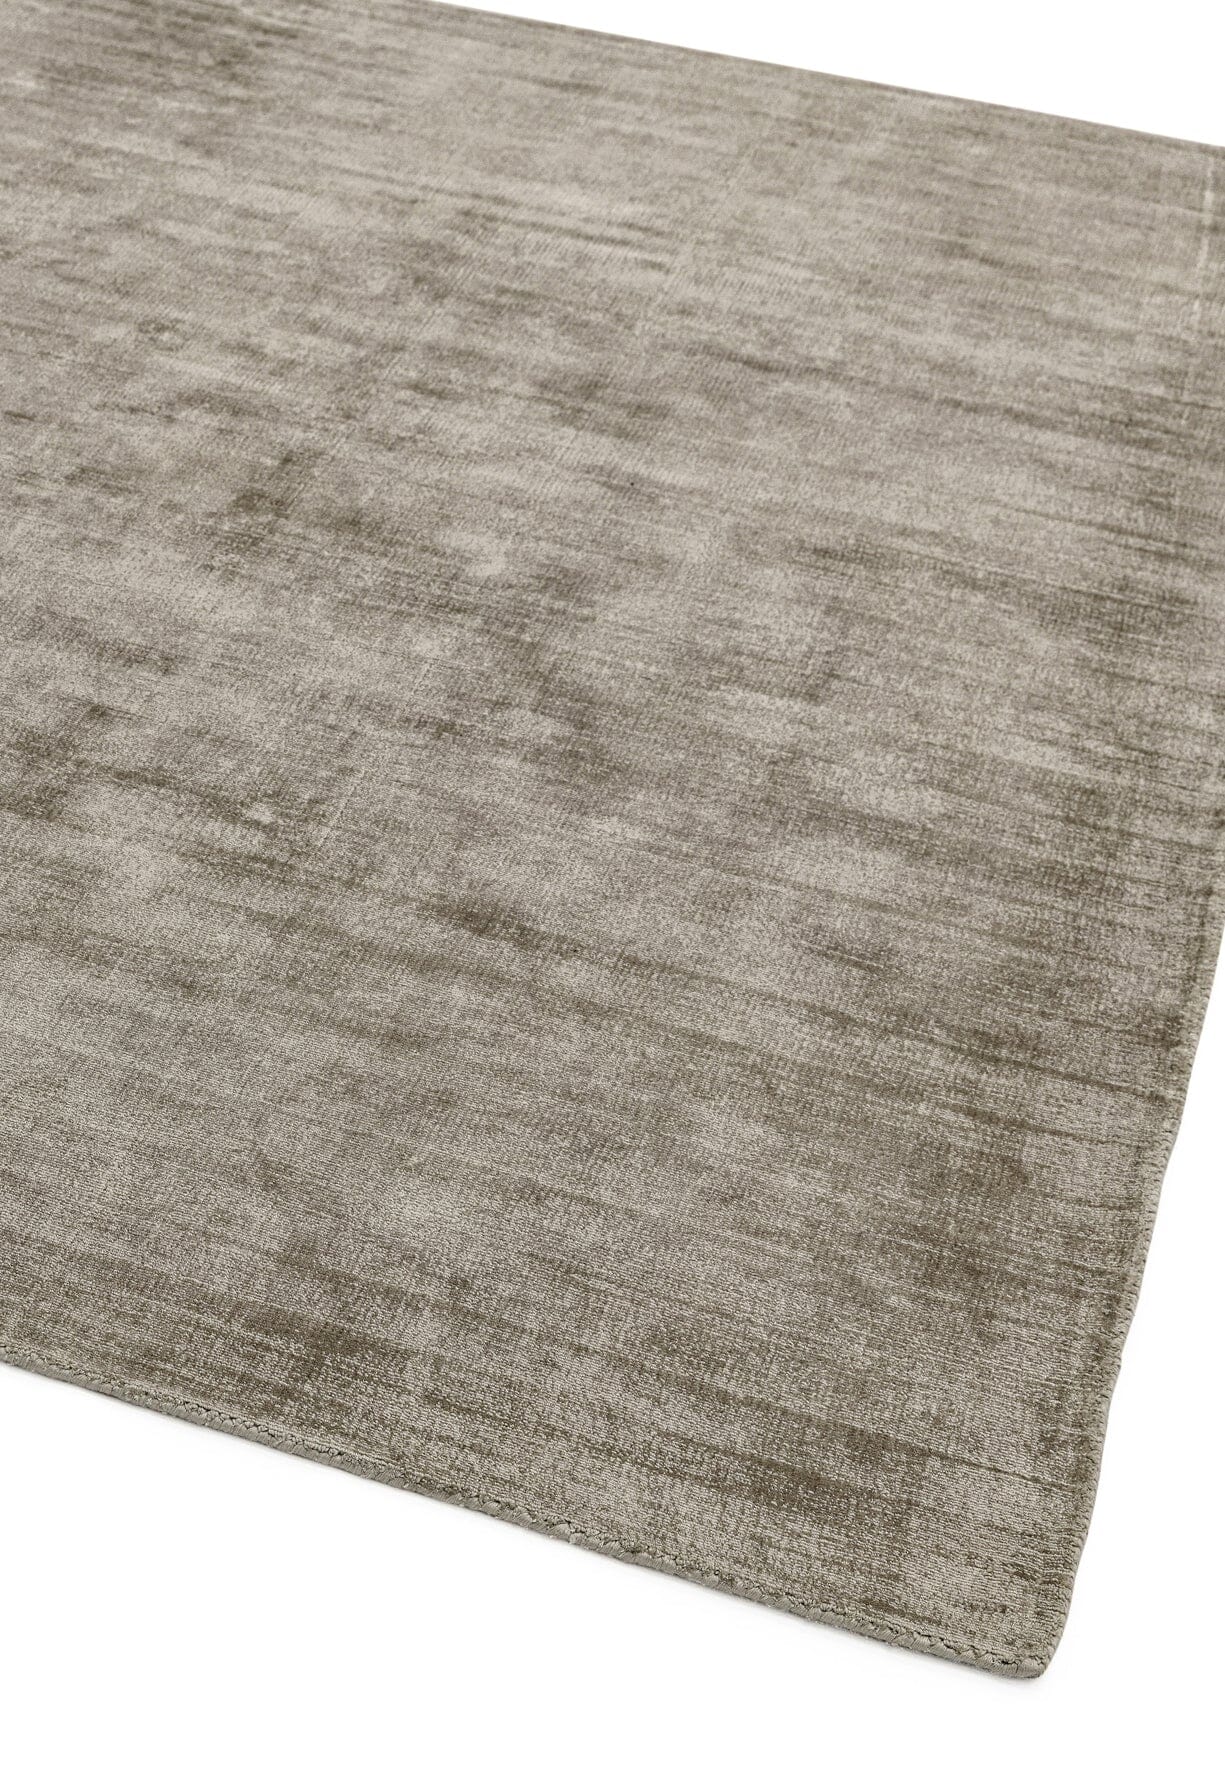  Asiatic Carpets-Asiatic Carpets Blade Hand Woven Runner Moleskin - 66 x 240cm-Beige, Natural 605 